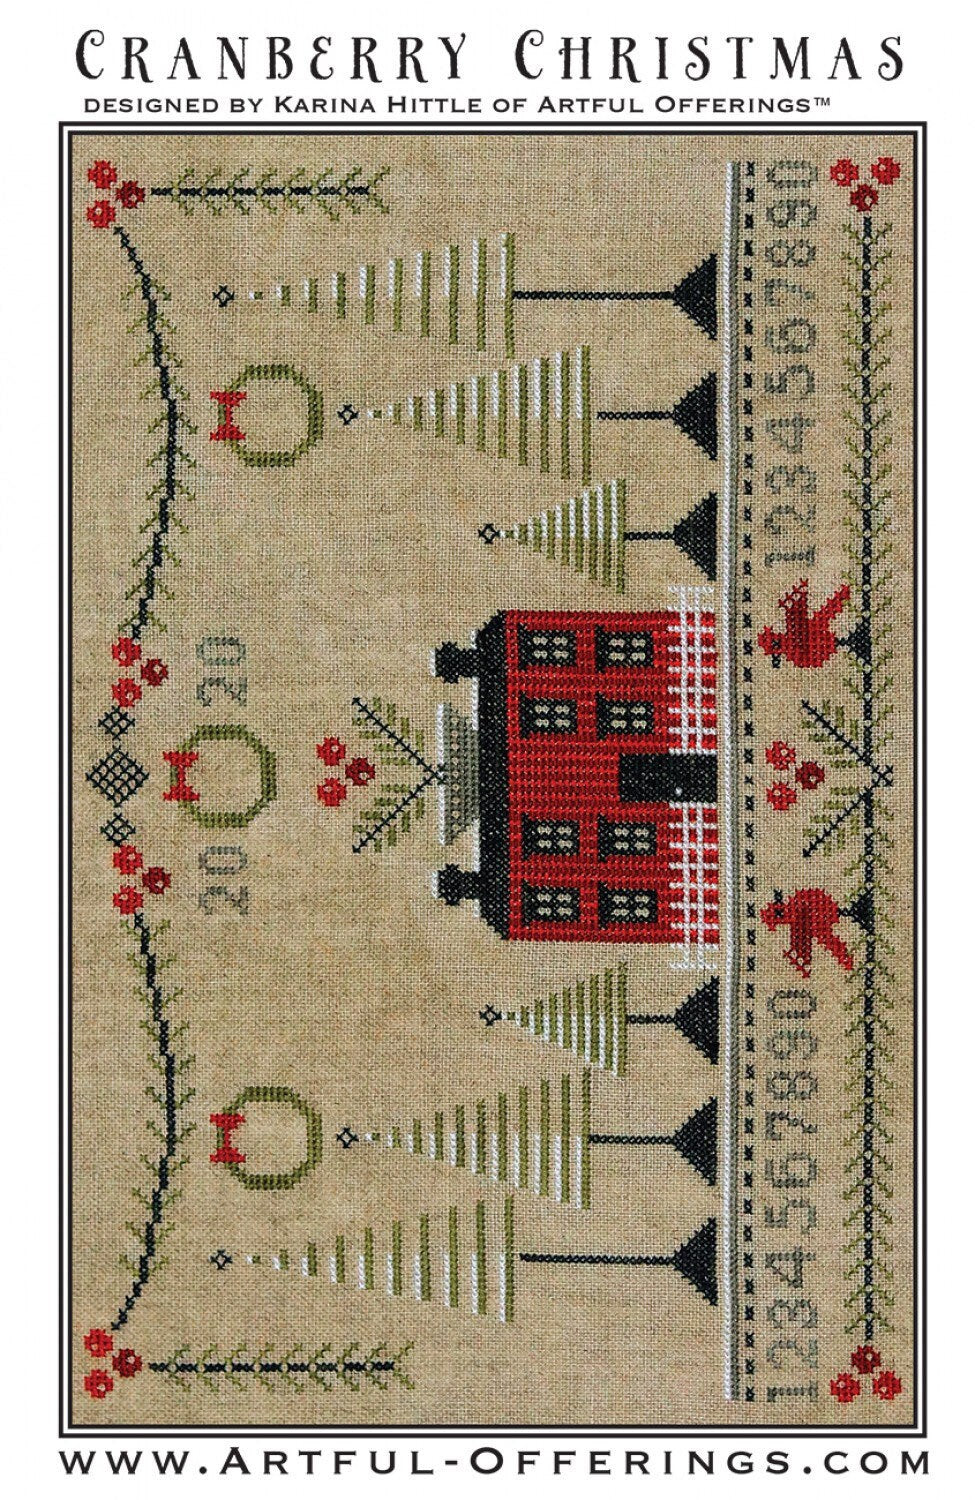 Cranberry Christmas Cross Stitch Pattern - Artful Offerings - Karina Hittle